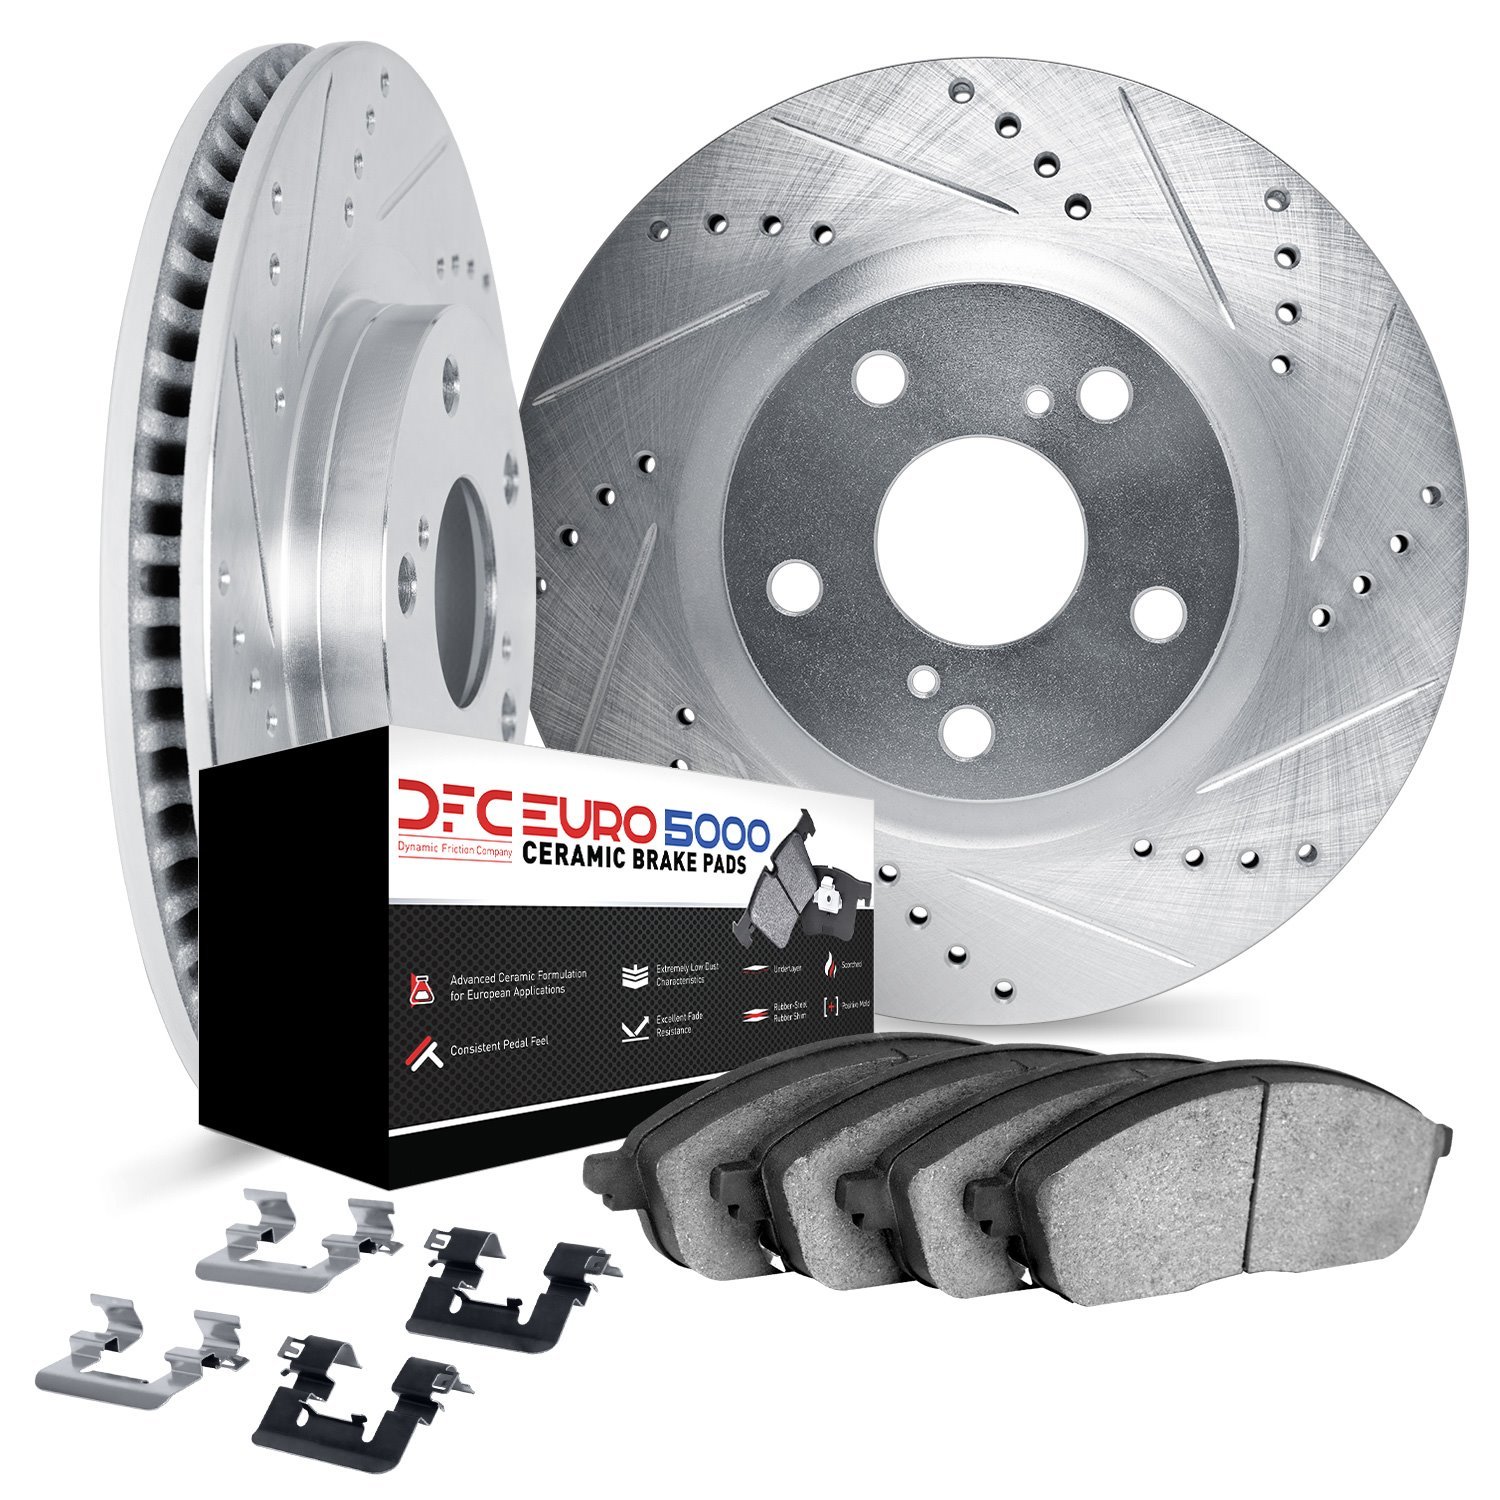 7612-63071 Drilled/Slotted Brake Rotors w/5000 Euro Ceramic Brake Pads Kit & Hardware [Silver], 2013-2020 Mercedes-Benz, Positio